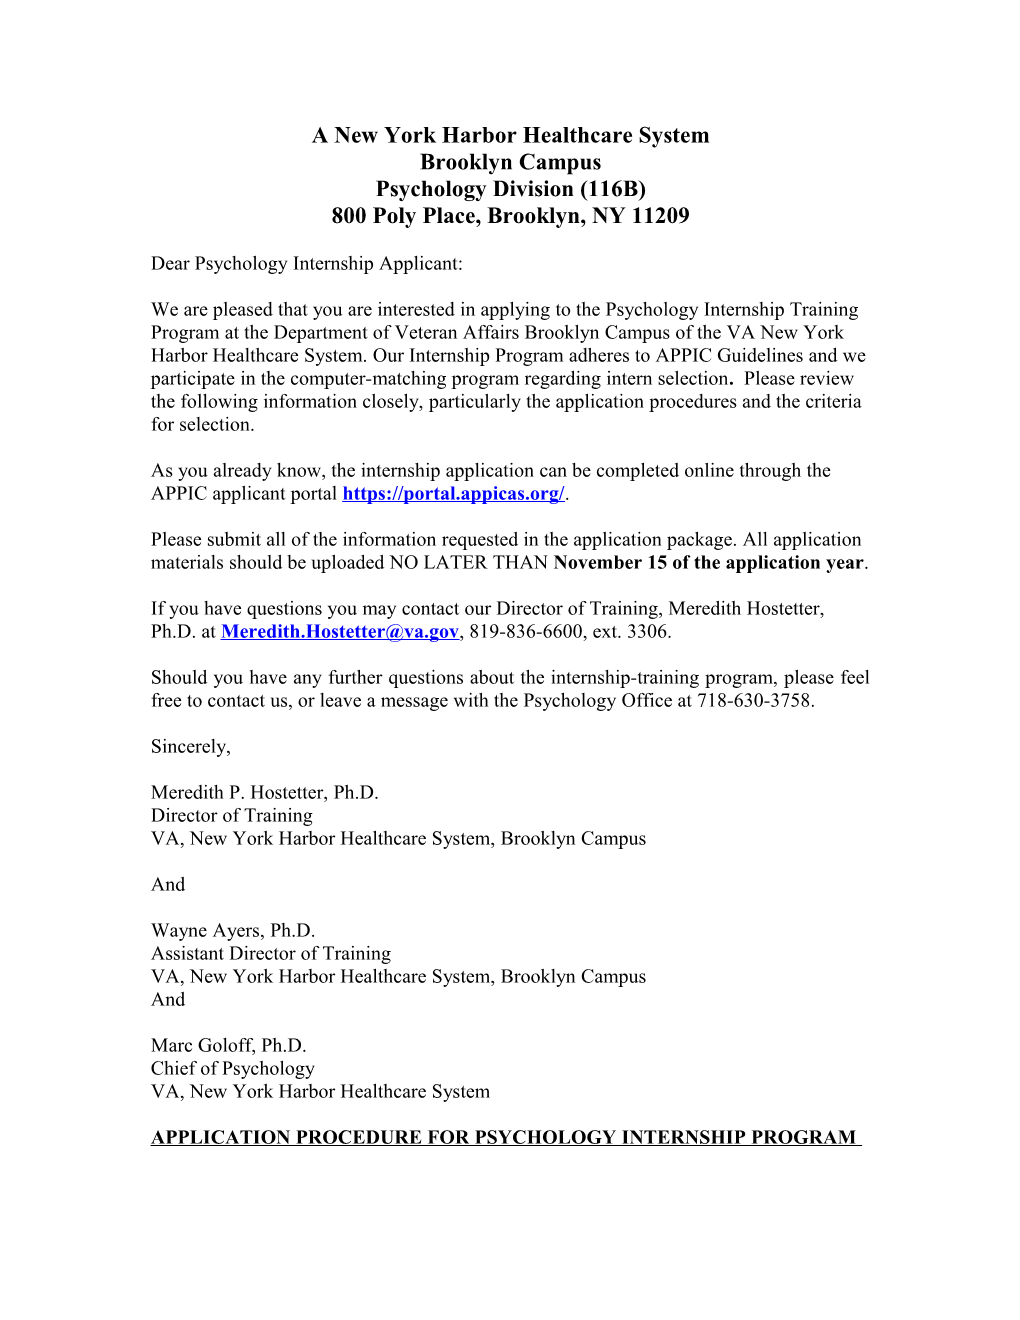 Psychology Internship Training Program at the Department of Veteran Affairs Brooklyn Campus